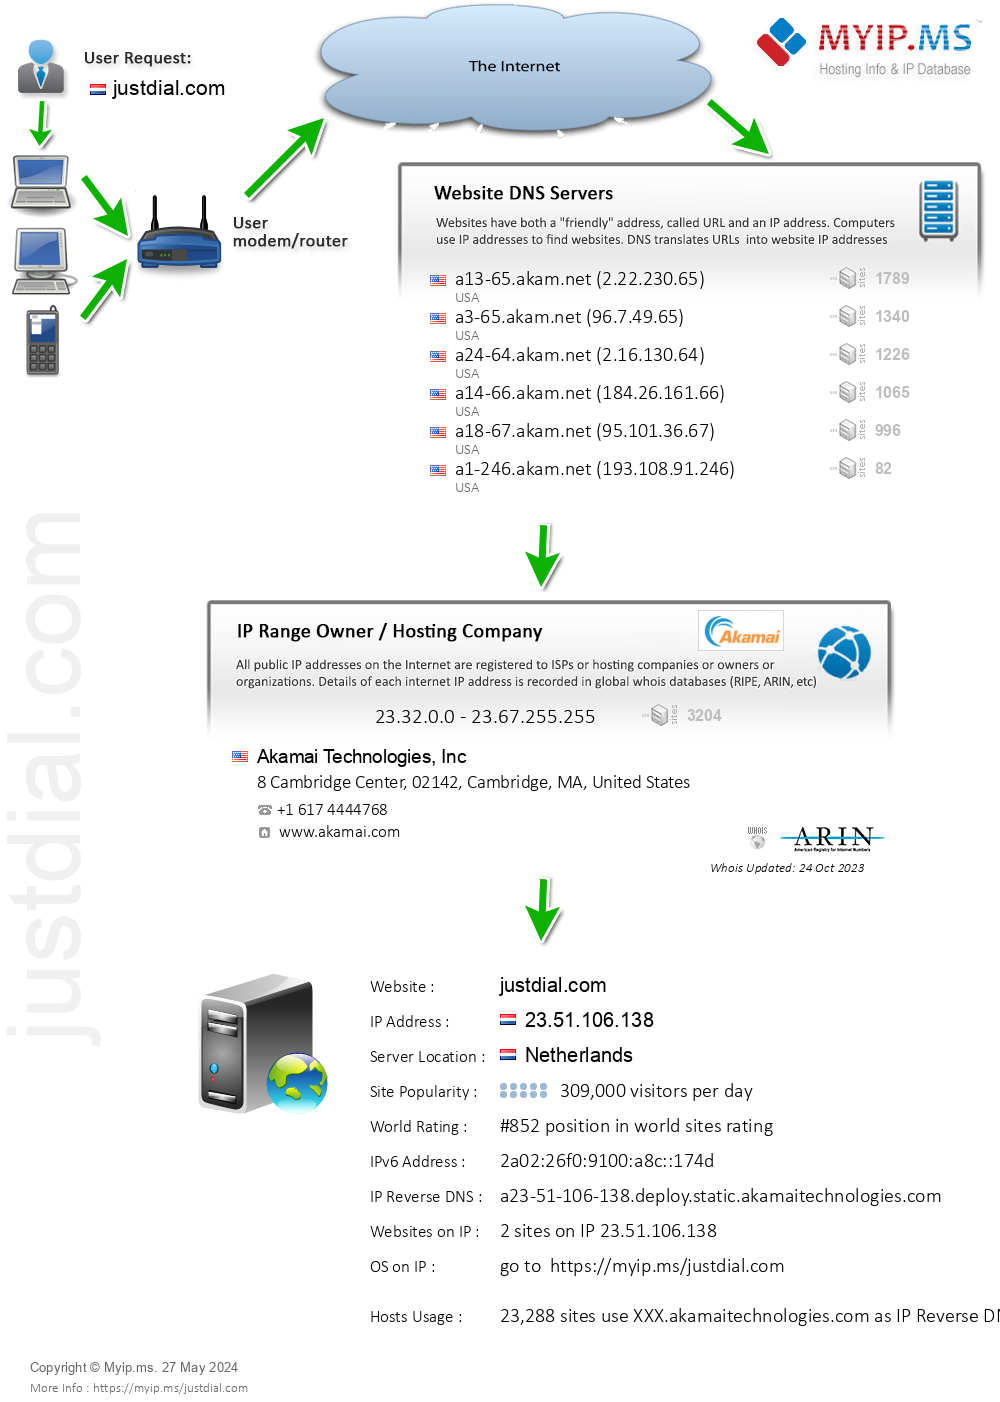 Justdial.com - Website Hosting Visual IP Diagram